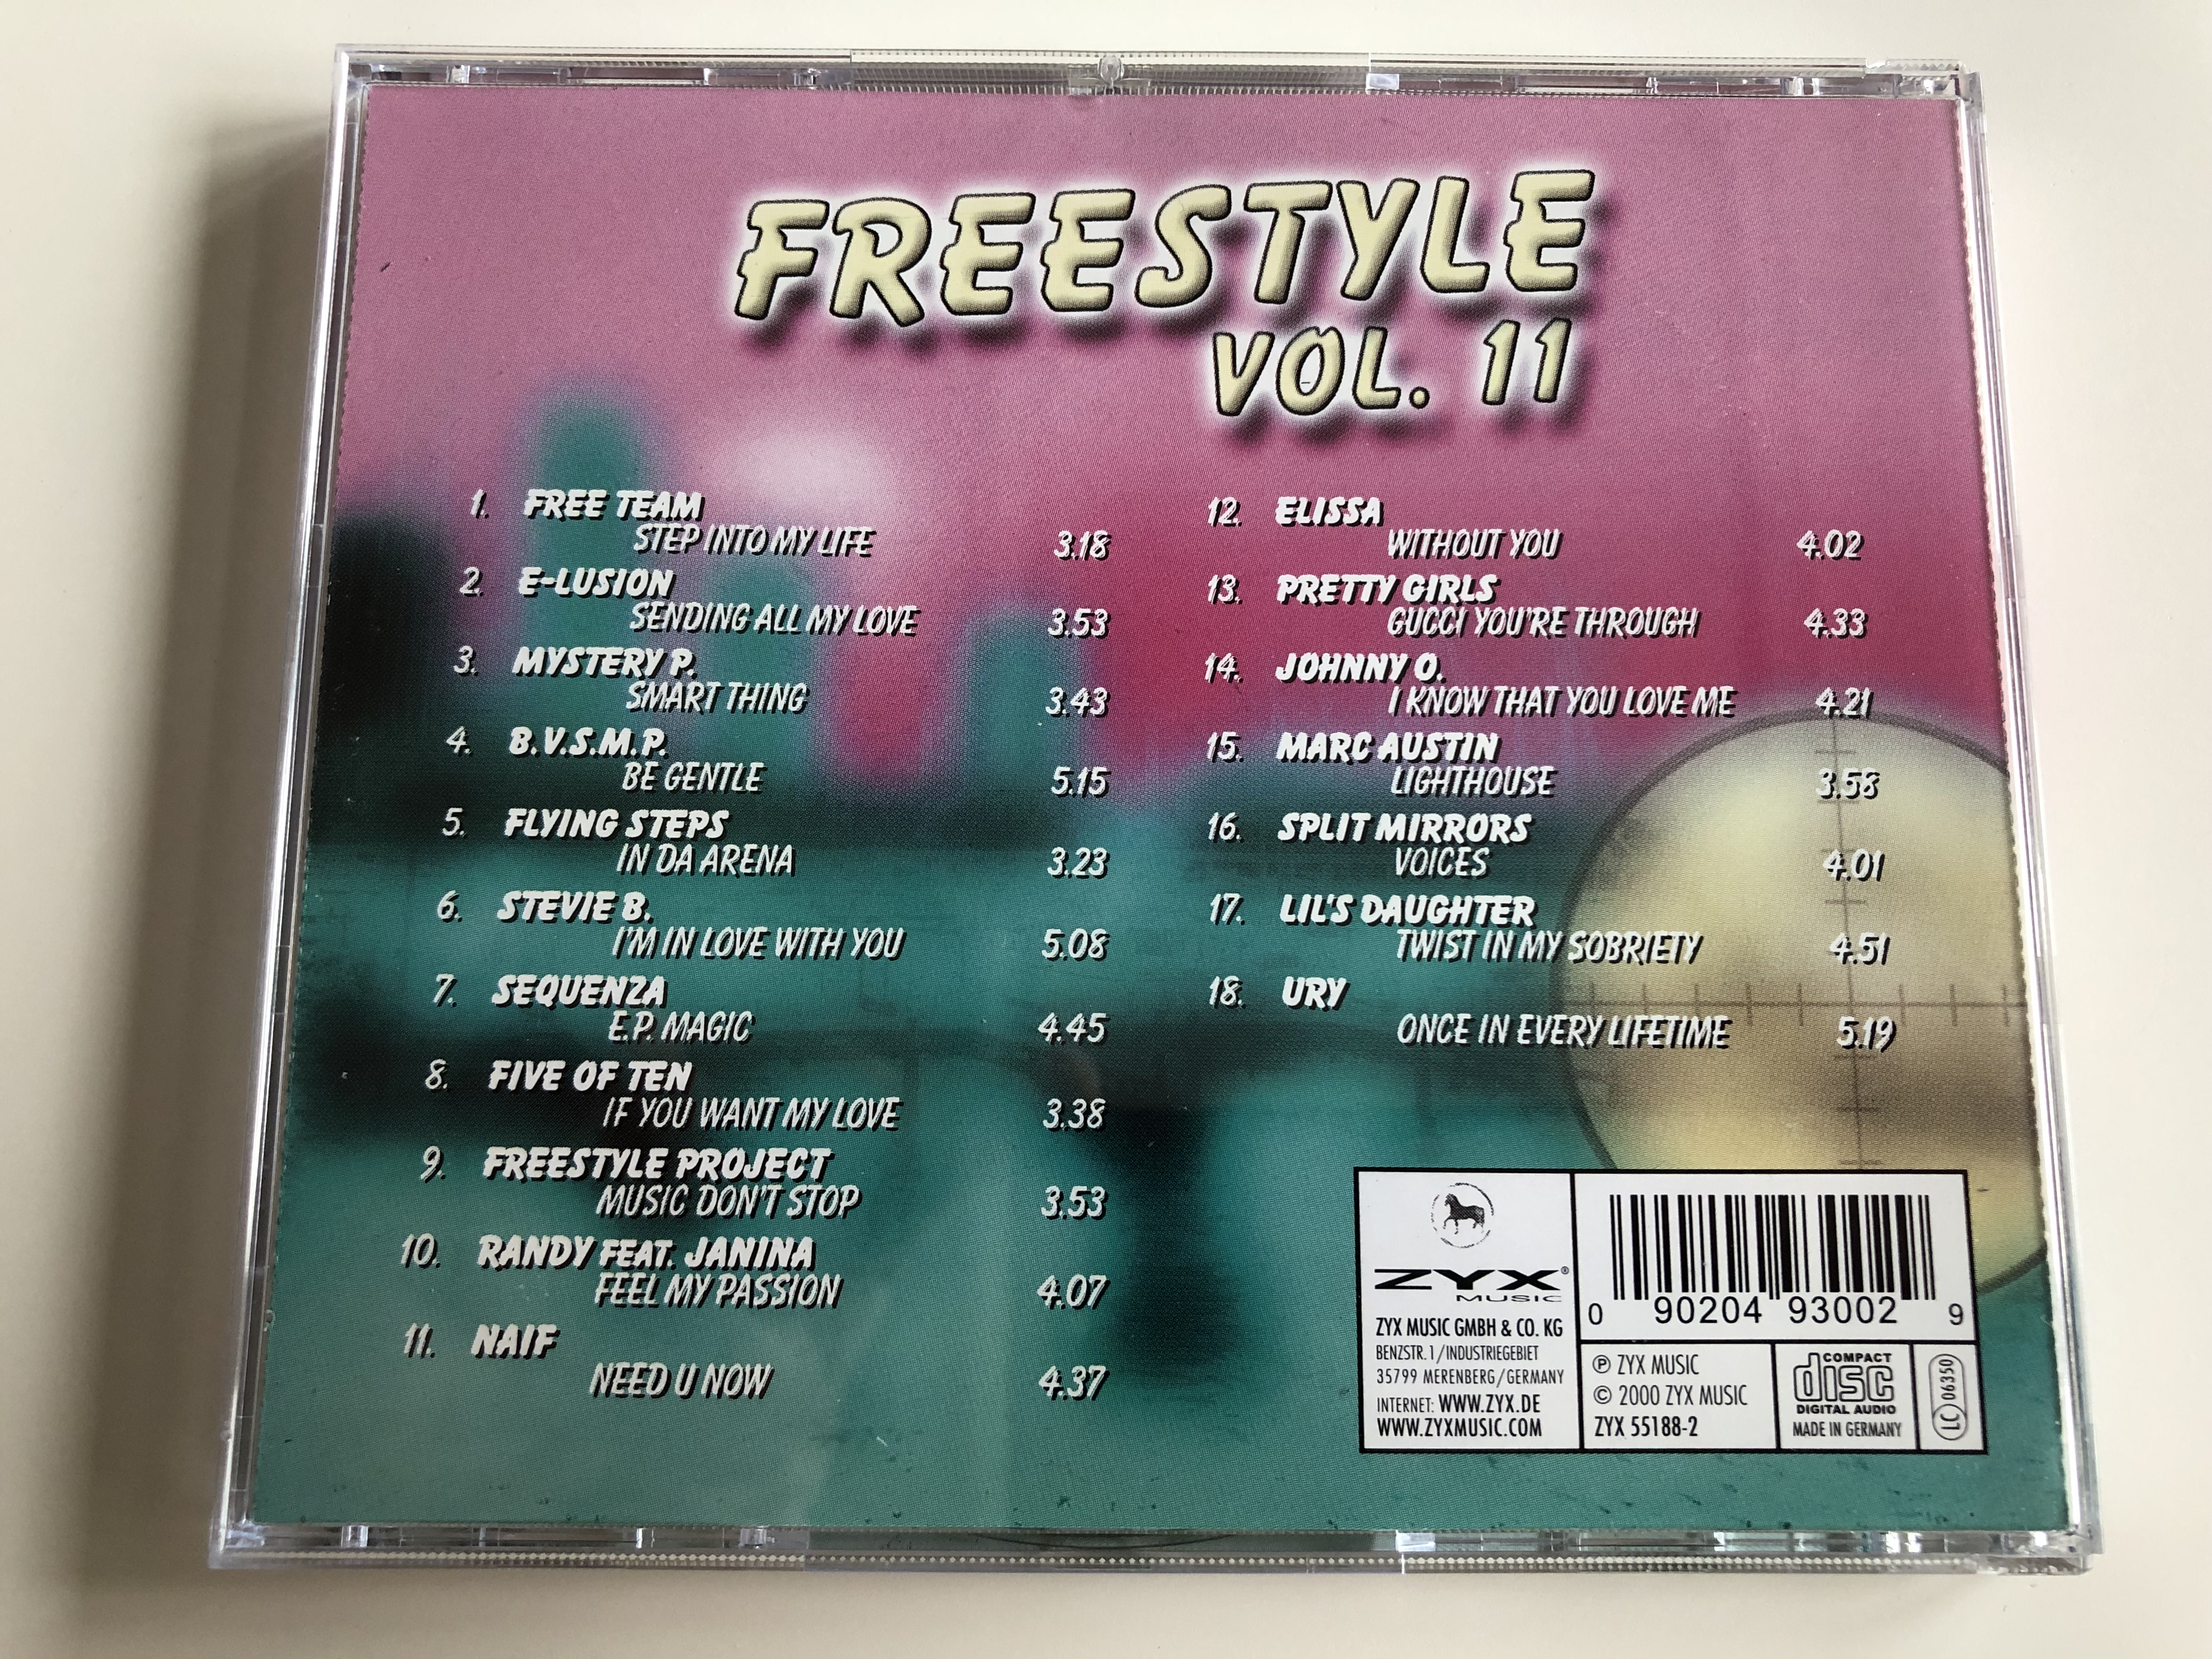 freestyle-vol.-11-flying-steps-stevie-b.-b.-v.-s.-m.-p.-free-team-pretty-girls-...-and-more-zyx-music-audio-cd-2000-zyx-55188-2-5-.jpg